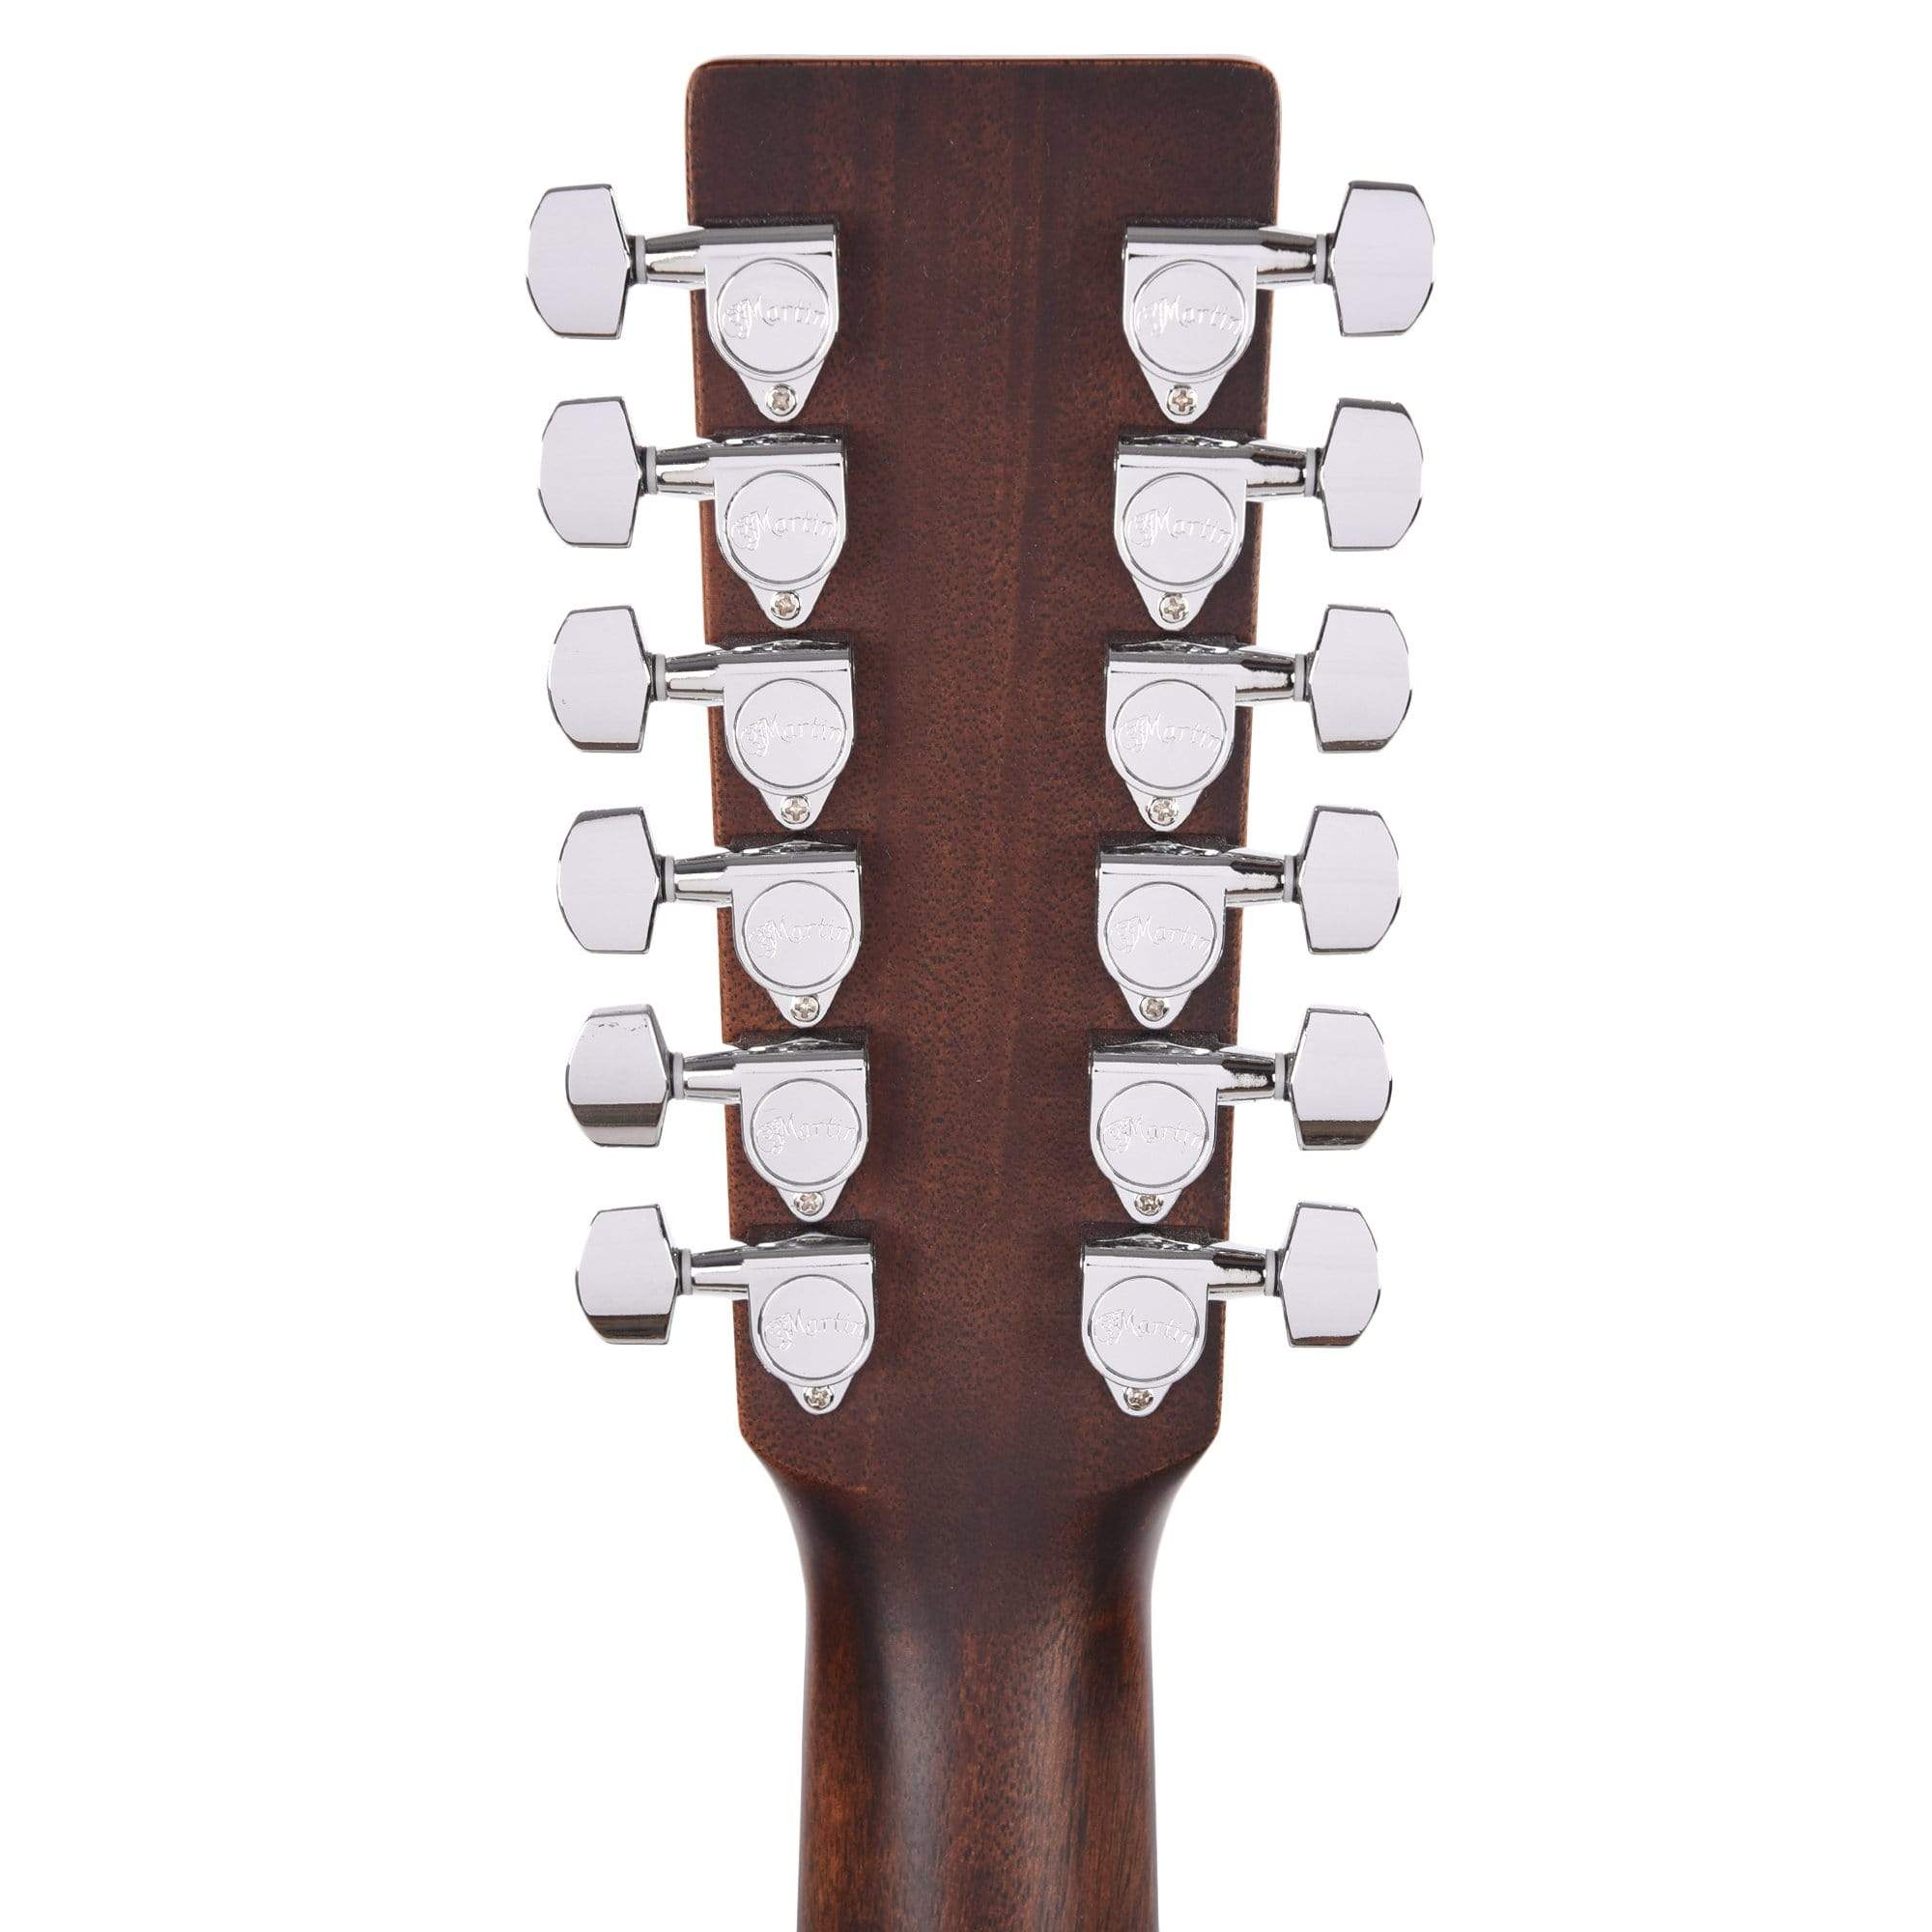 Martin Grand J-16E 12-String Sitka/Rosewood Natural LEFTY Acoustic Guitars / Left-Handed